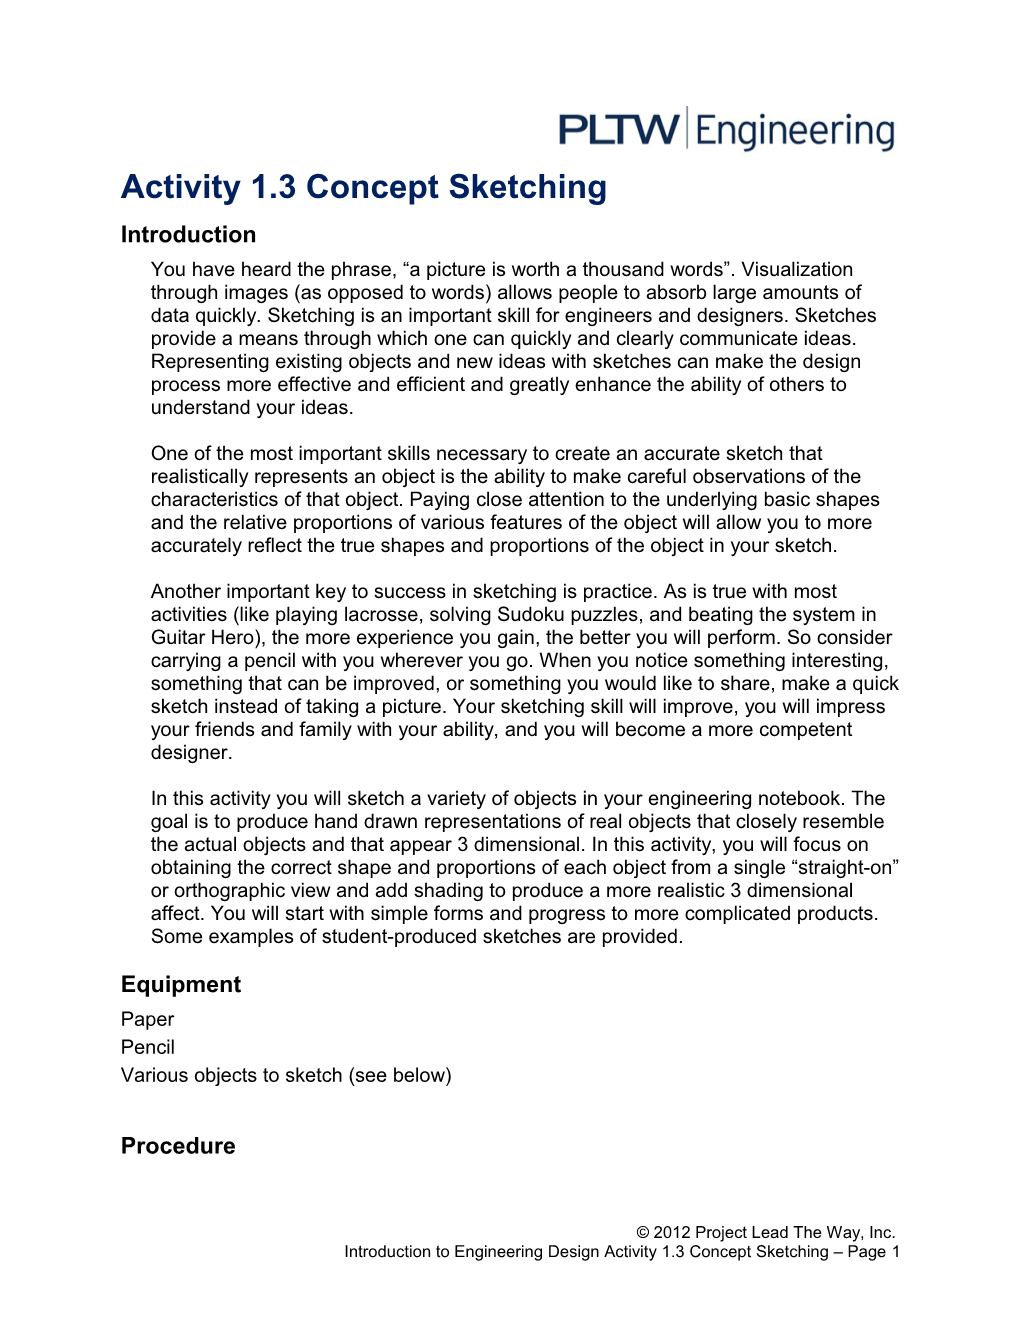 Activity 1.3 Concept Sketching